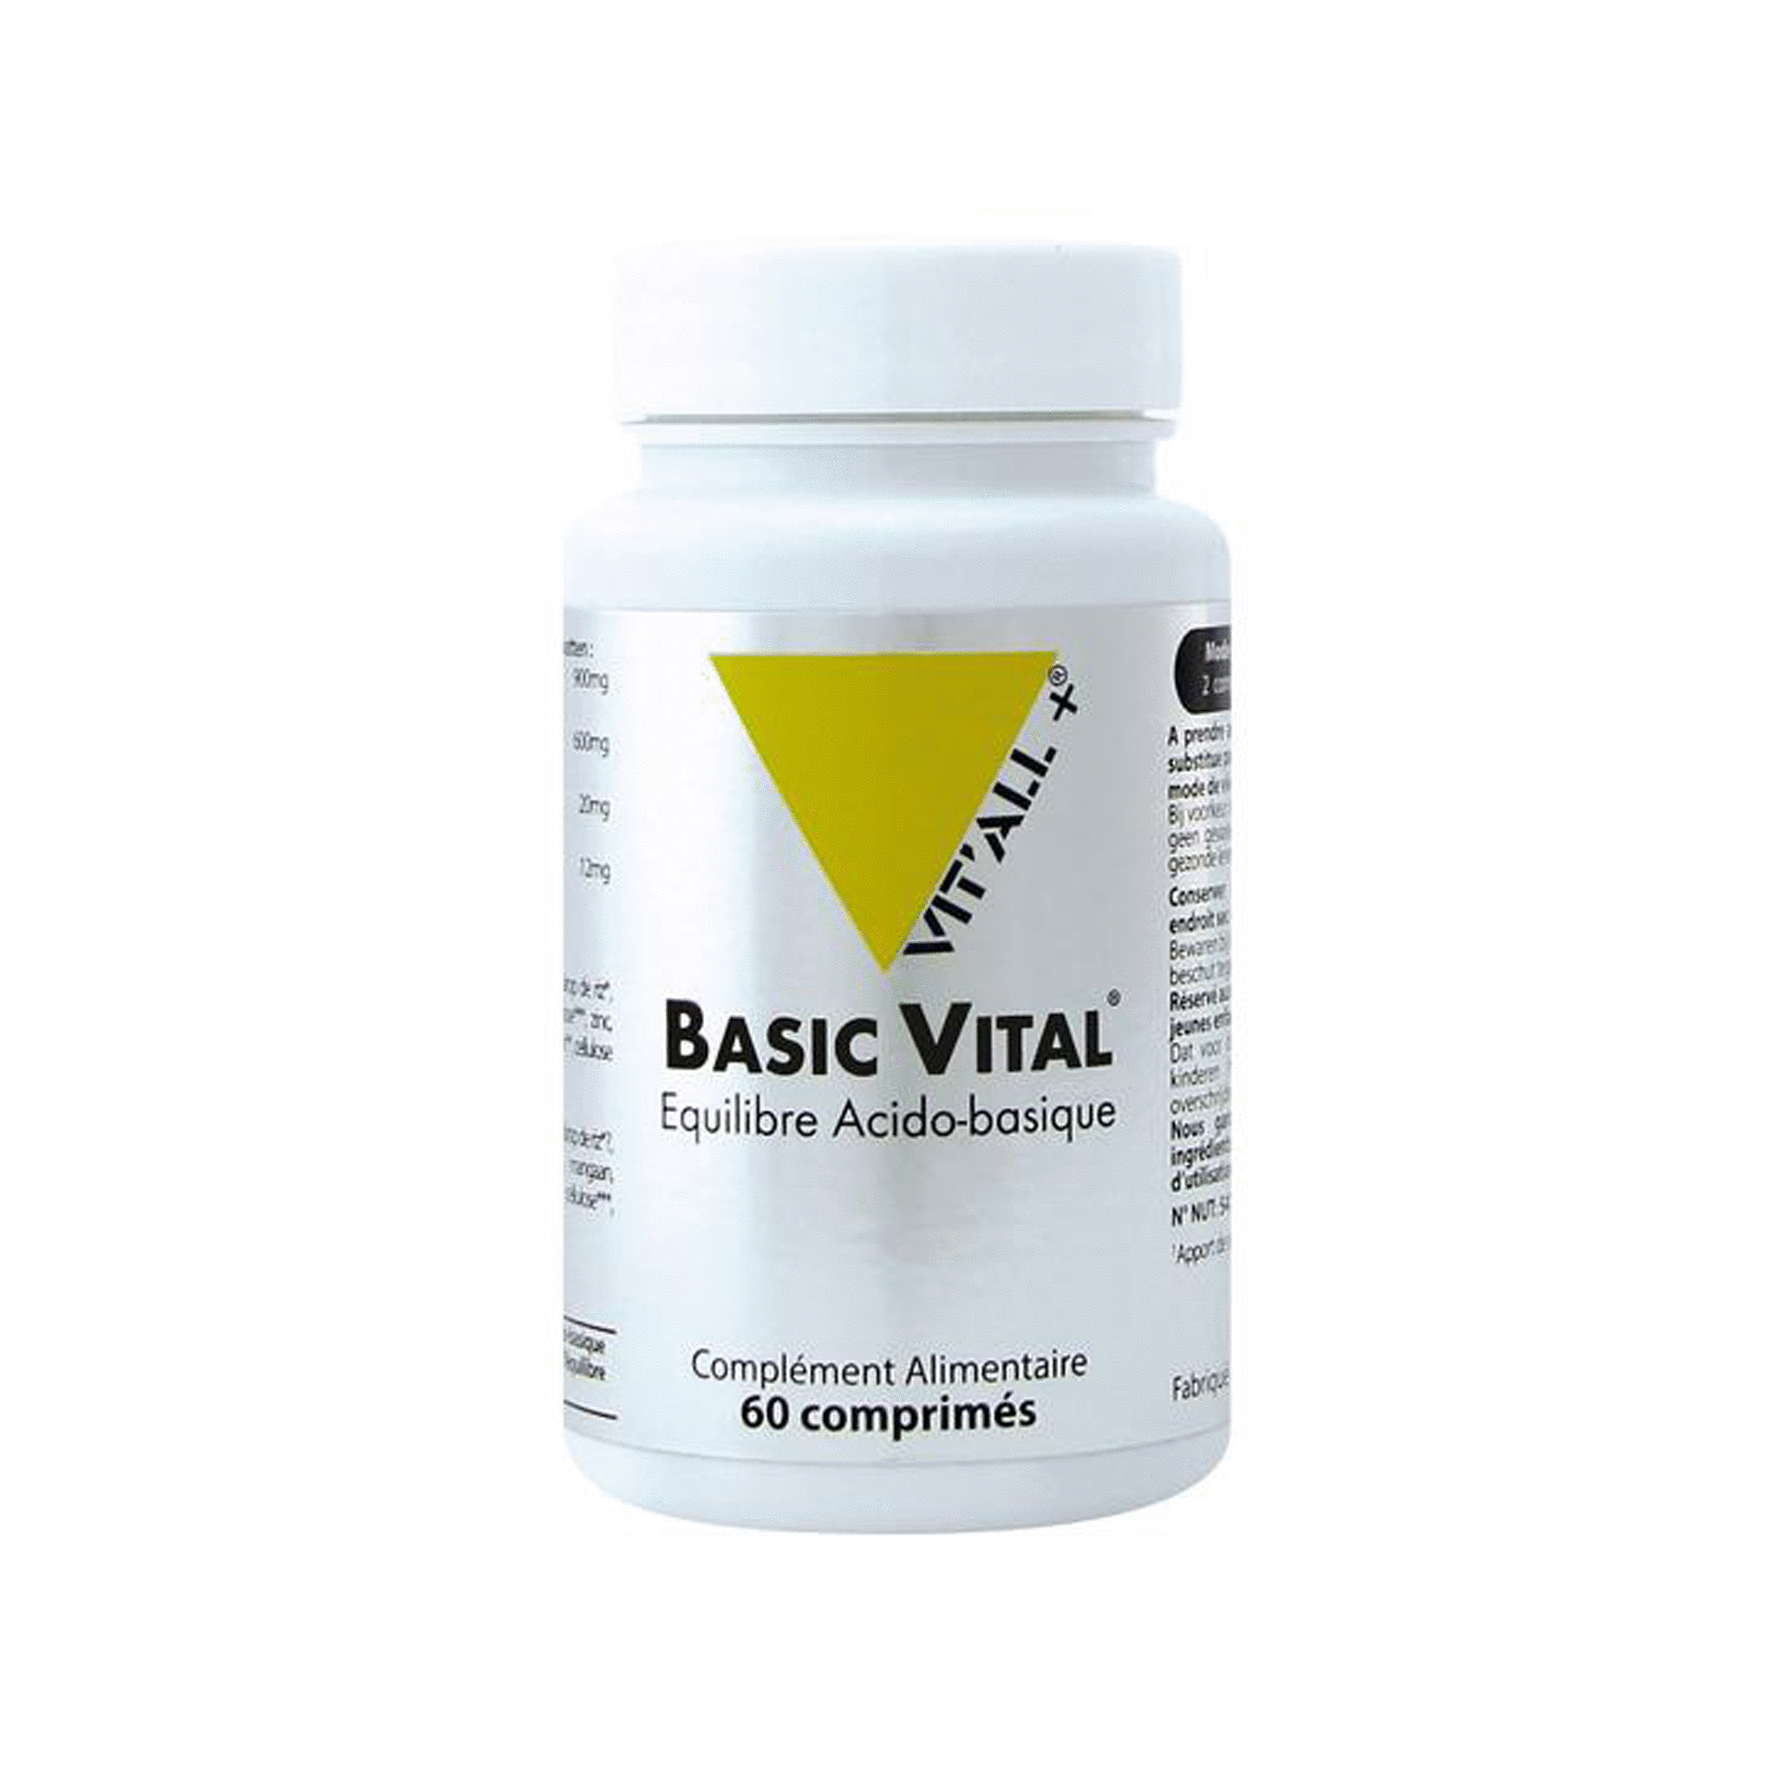 Basic Vital - Equilibre acido-basique